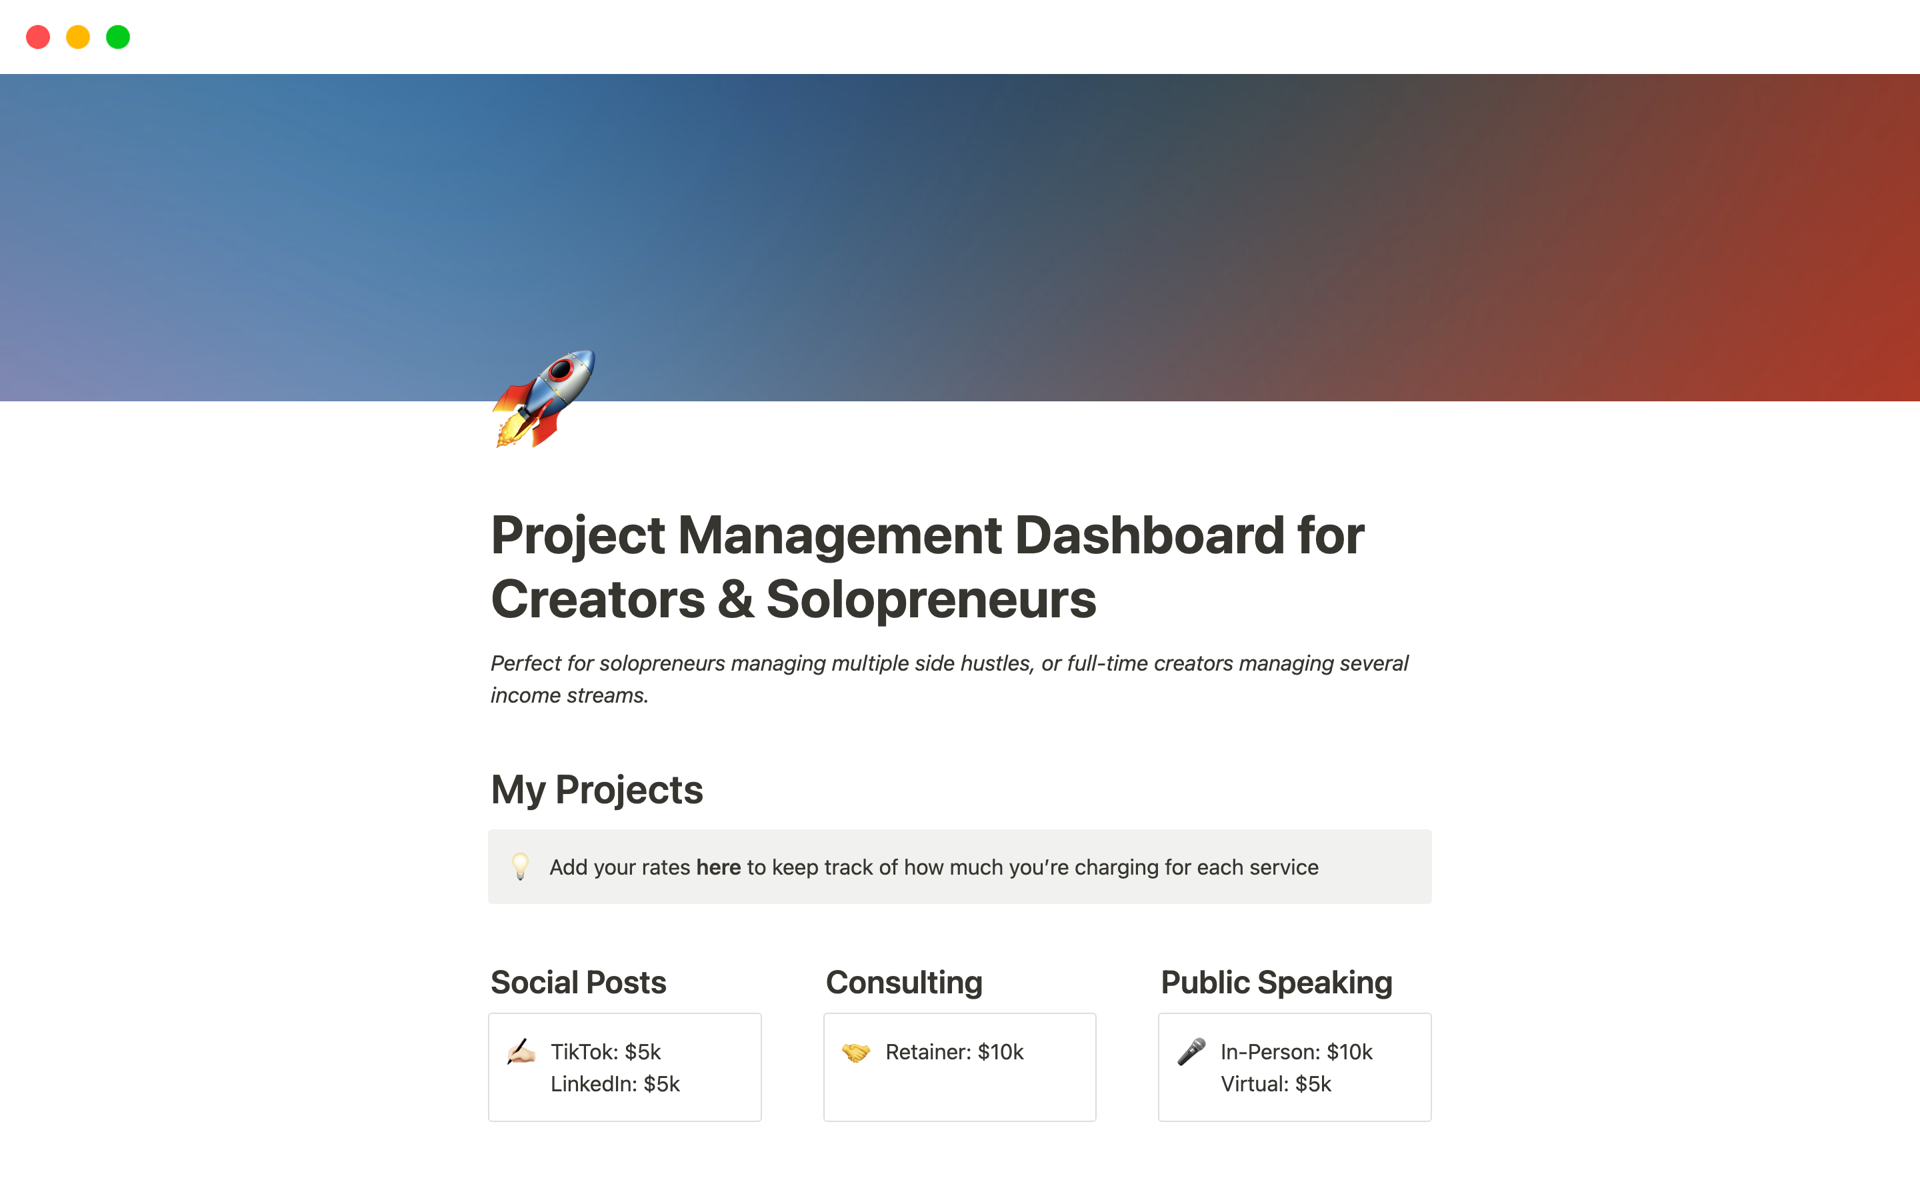 Project Management Dashboard for Creators & Solopreneurs님의 템플릿 미리보기